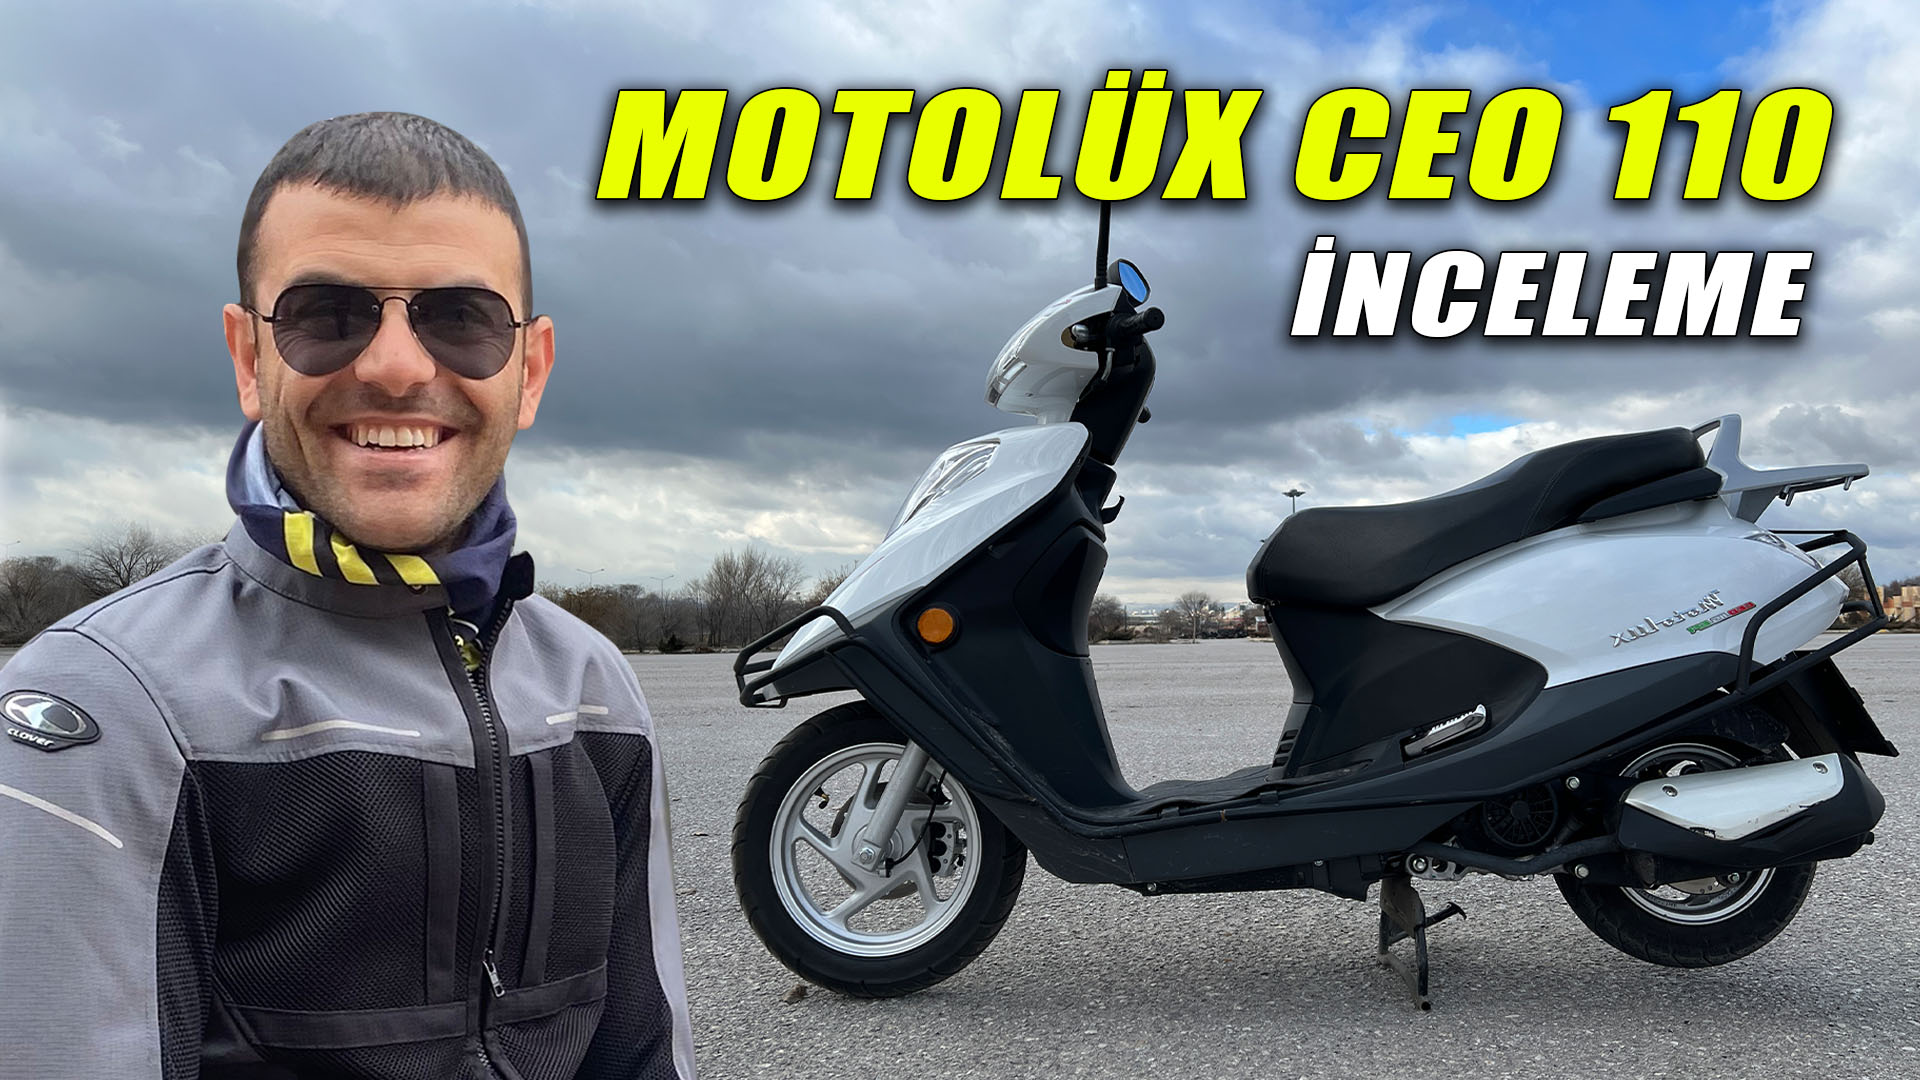 Motolüx CEO 110 Scooter Motosiklet inceleme | Kolaçan